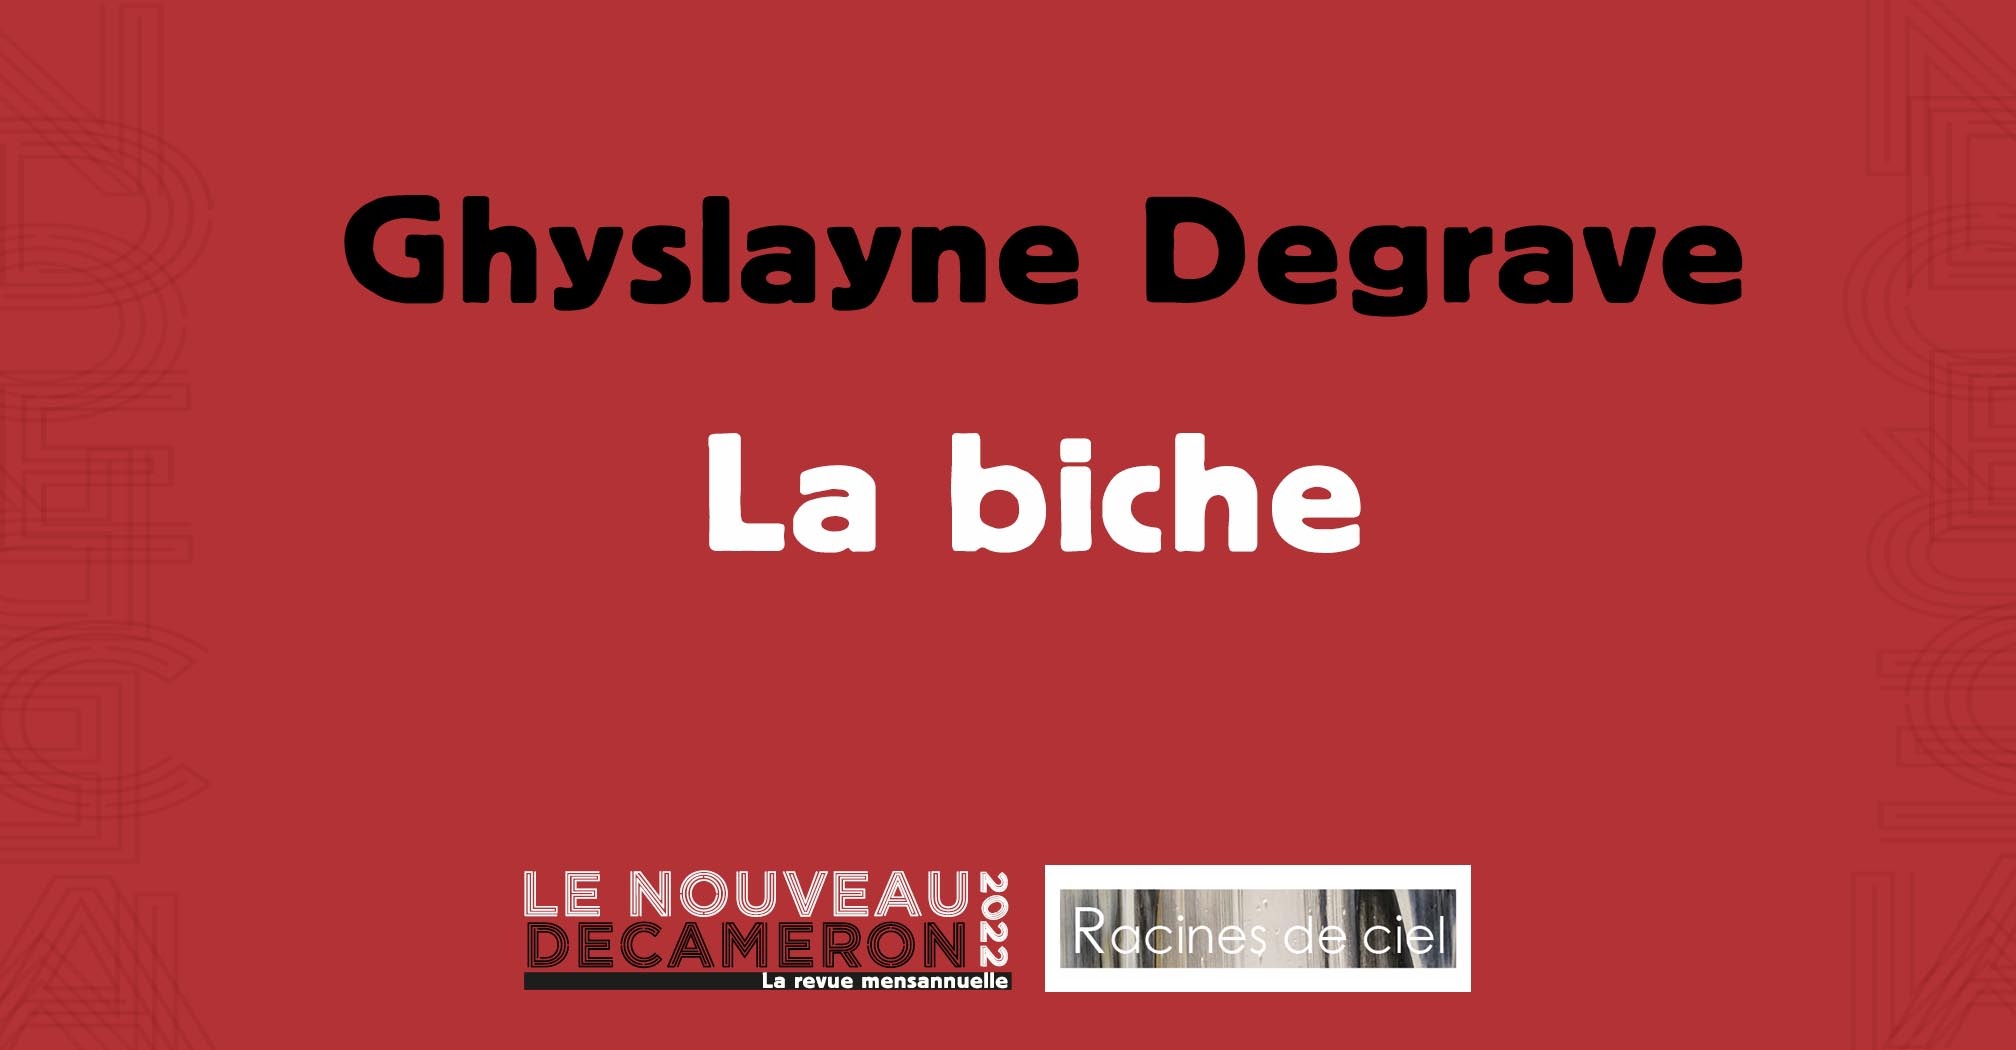 Ghyslayne Degrave - La biche